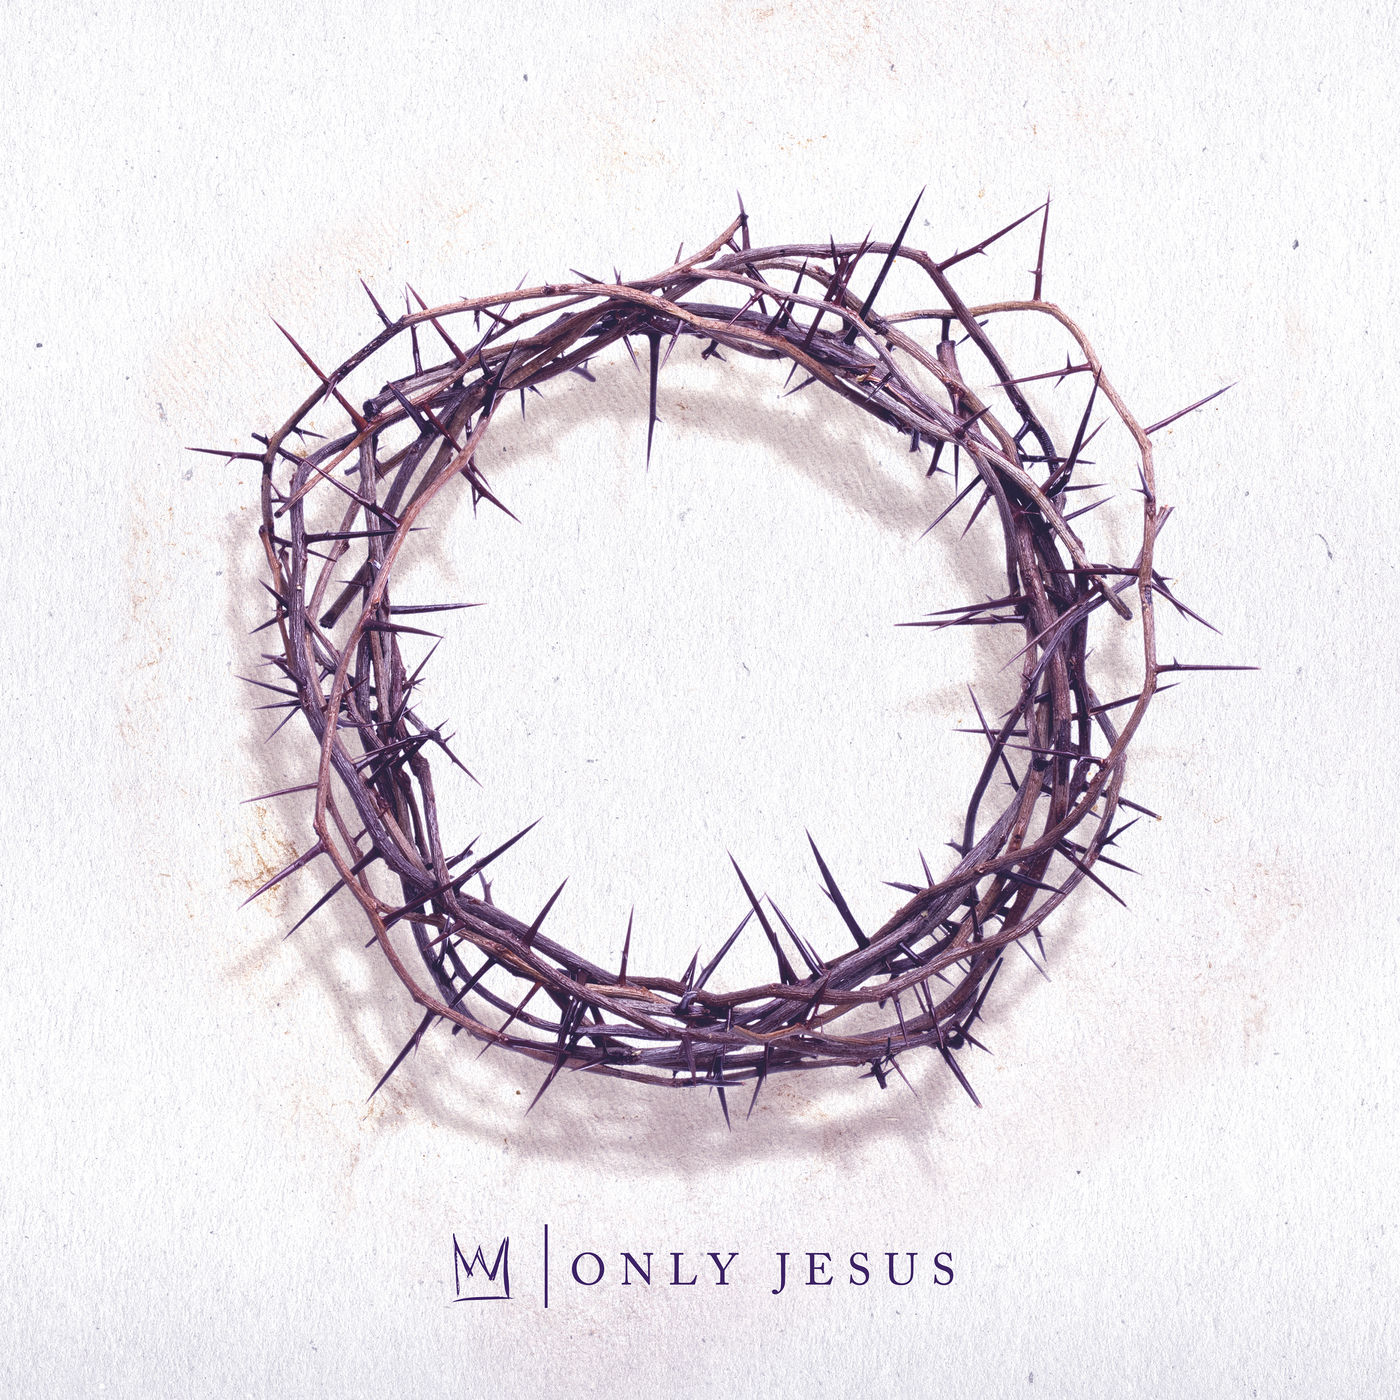 Casting Crowns - Only Jesus (2018) Album Info